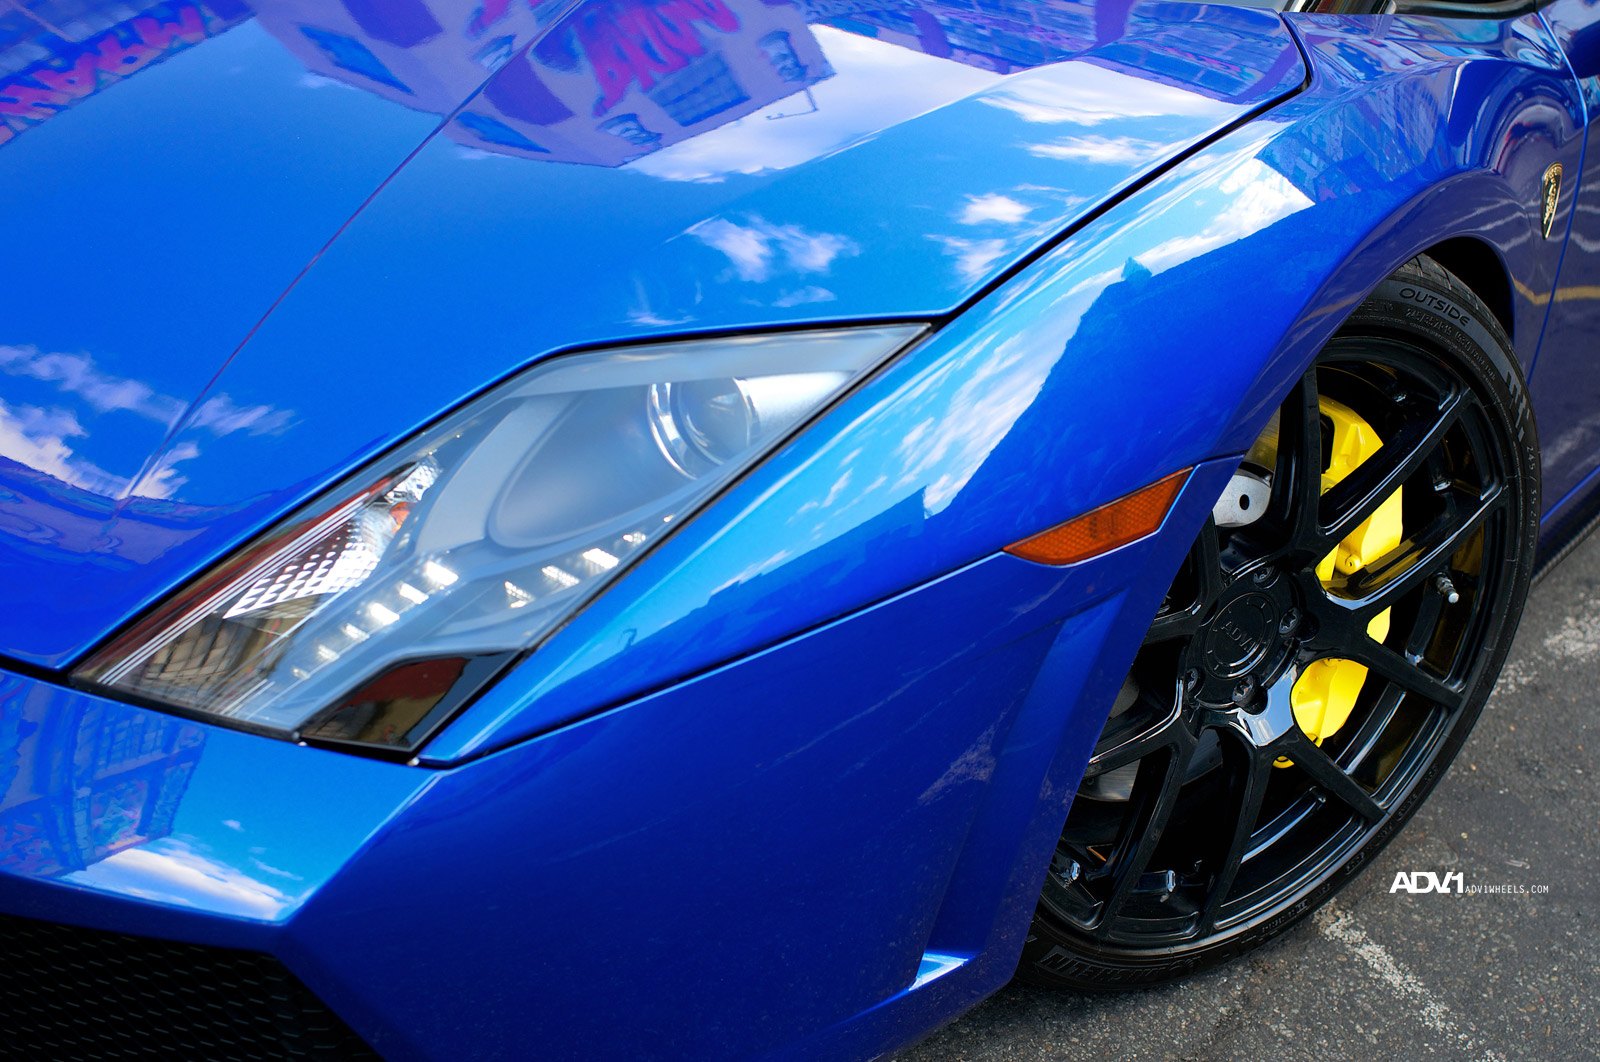 Blue Lamborghini Gallardo with Aftermarket Headlights - Photo by ADV.1